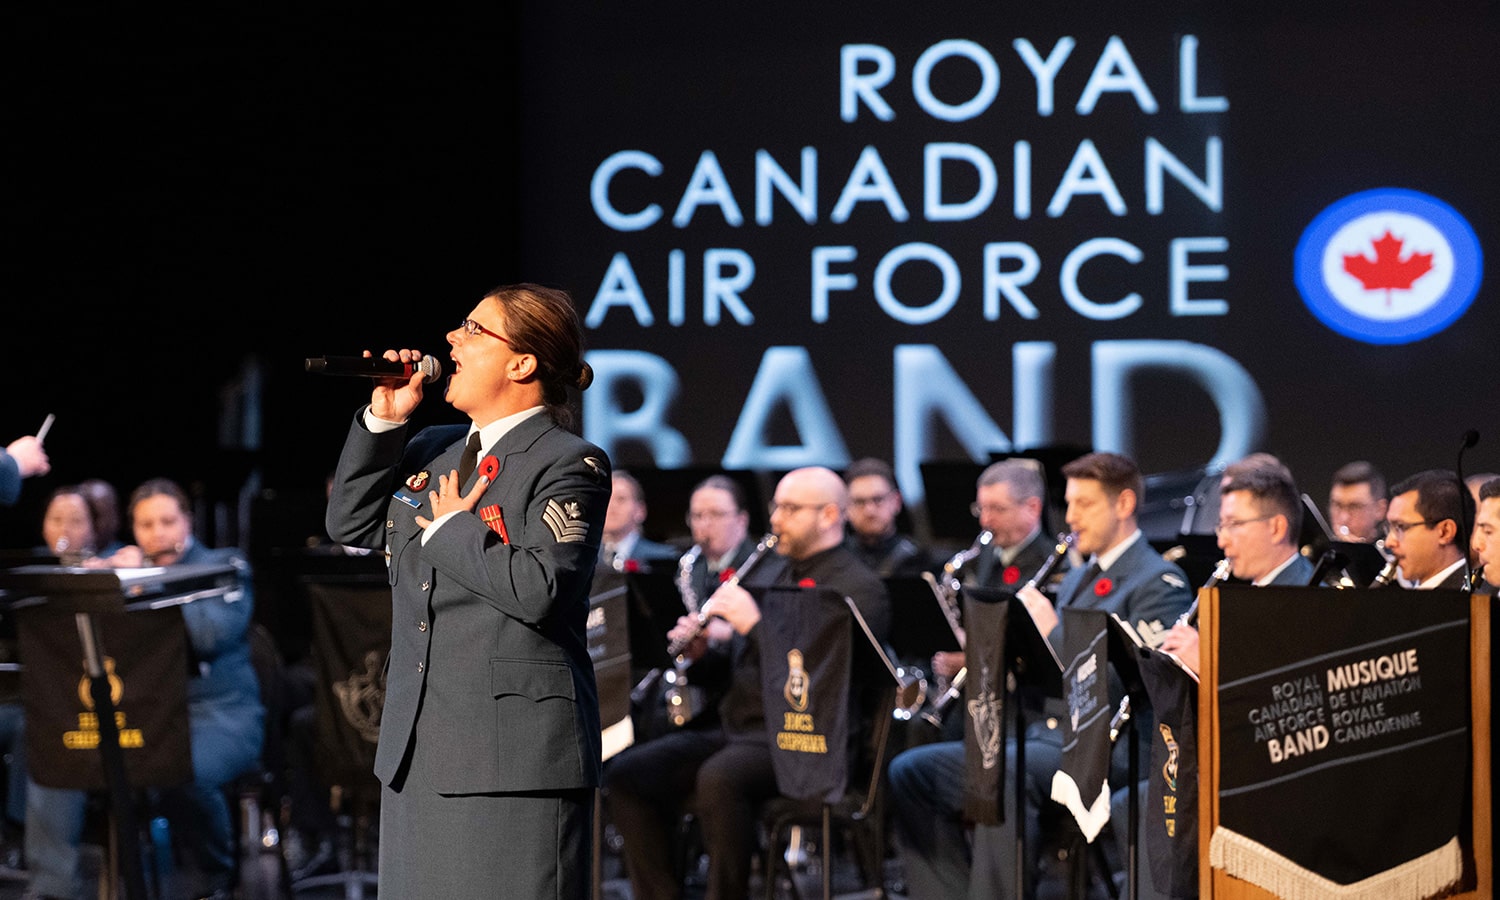 Royal Canadian Air Force Band performing